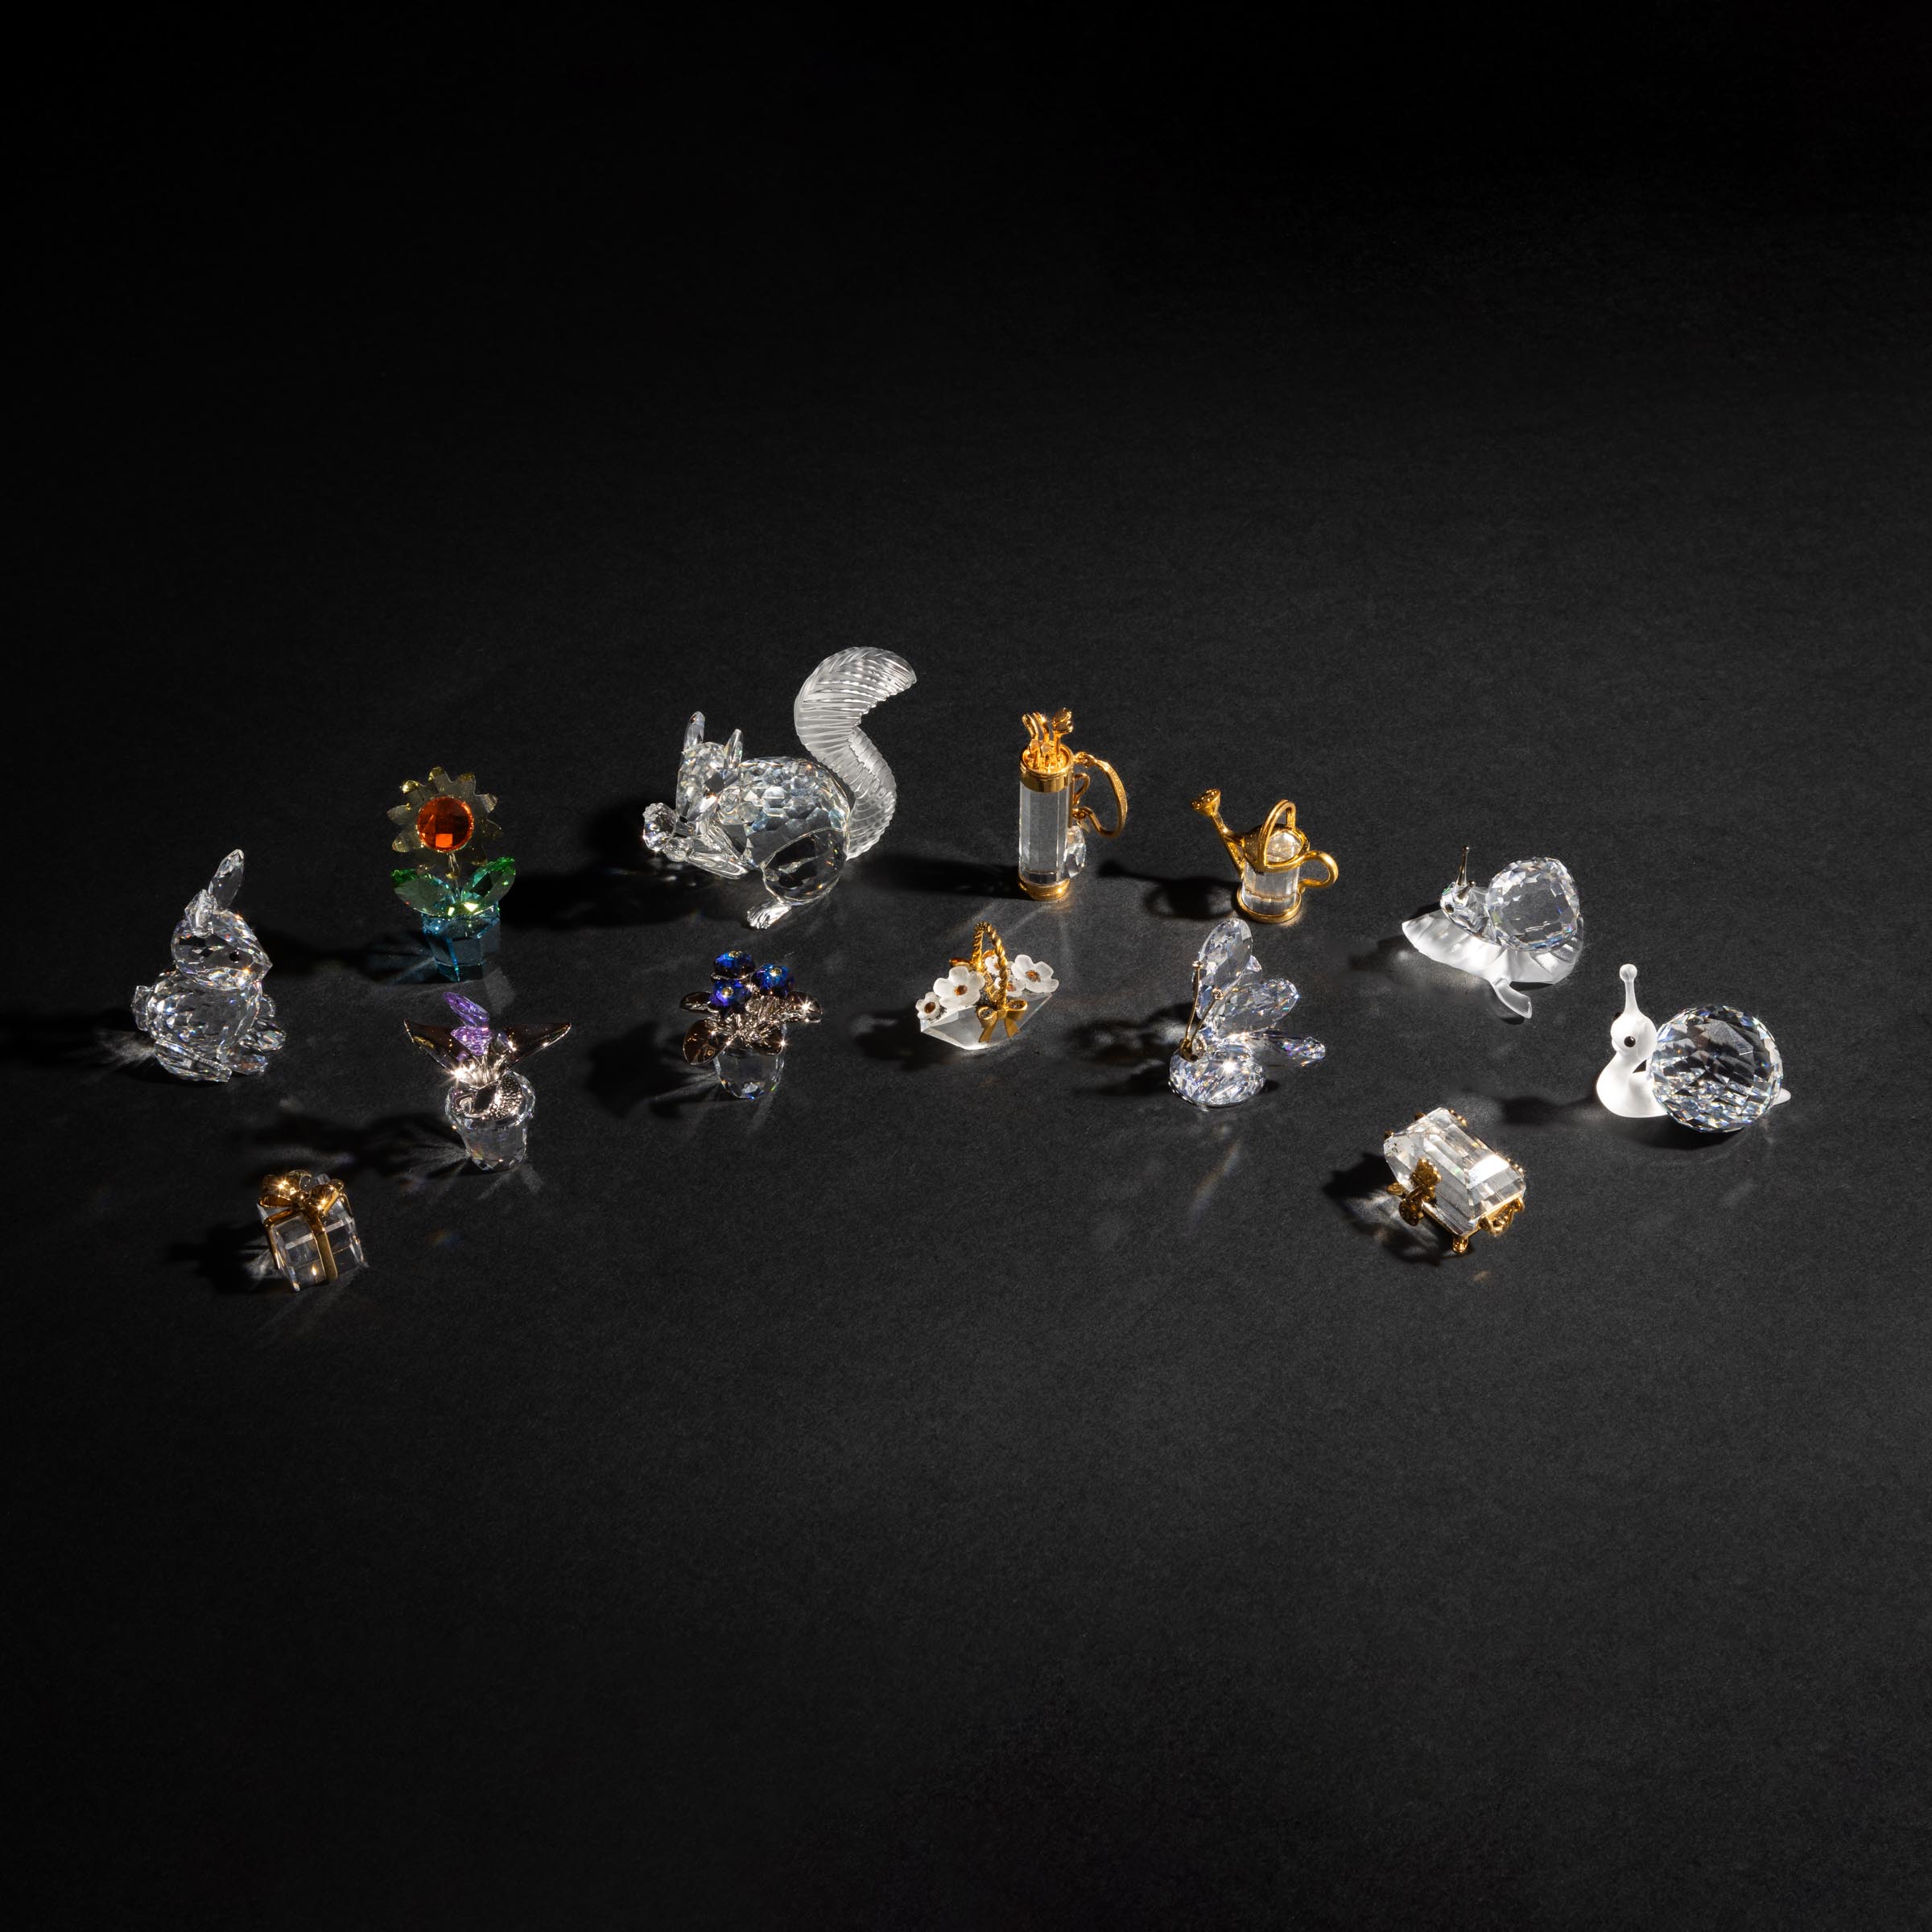 Group Of Swarovski Crystal Pieces 2fb0752